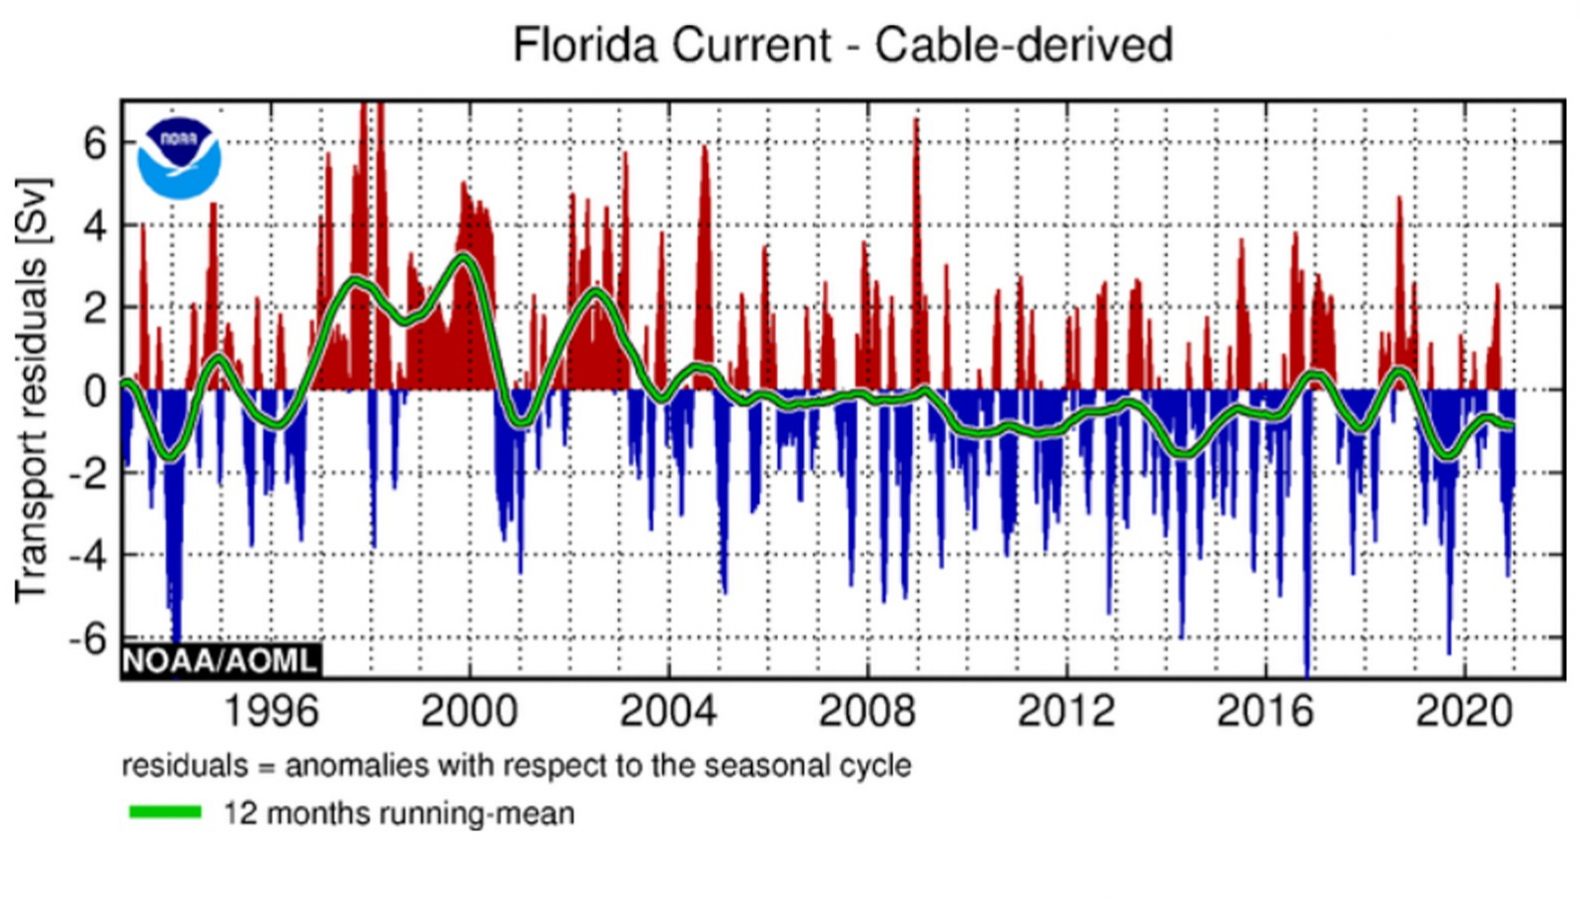 Florida current transport time series figure. October 20th, 2021.